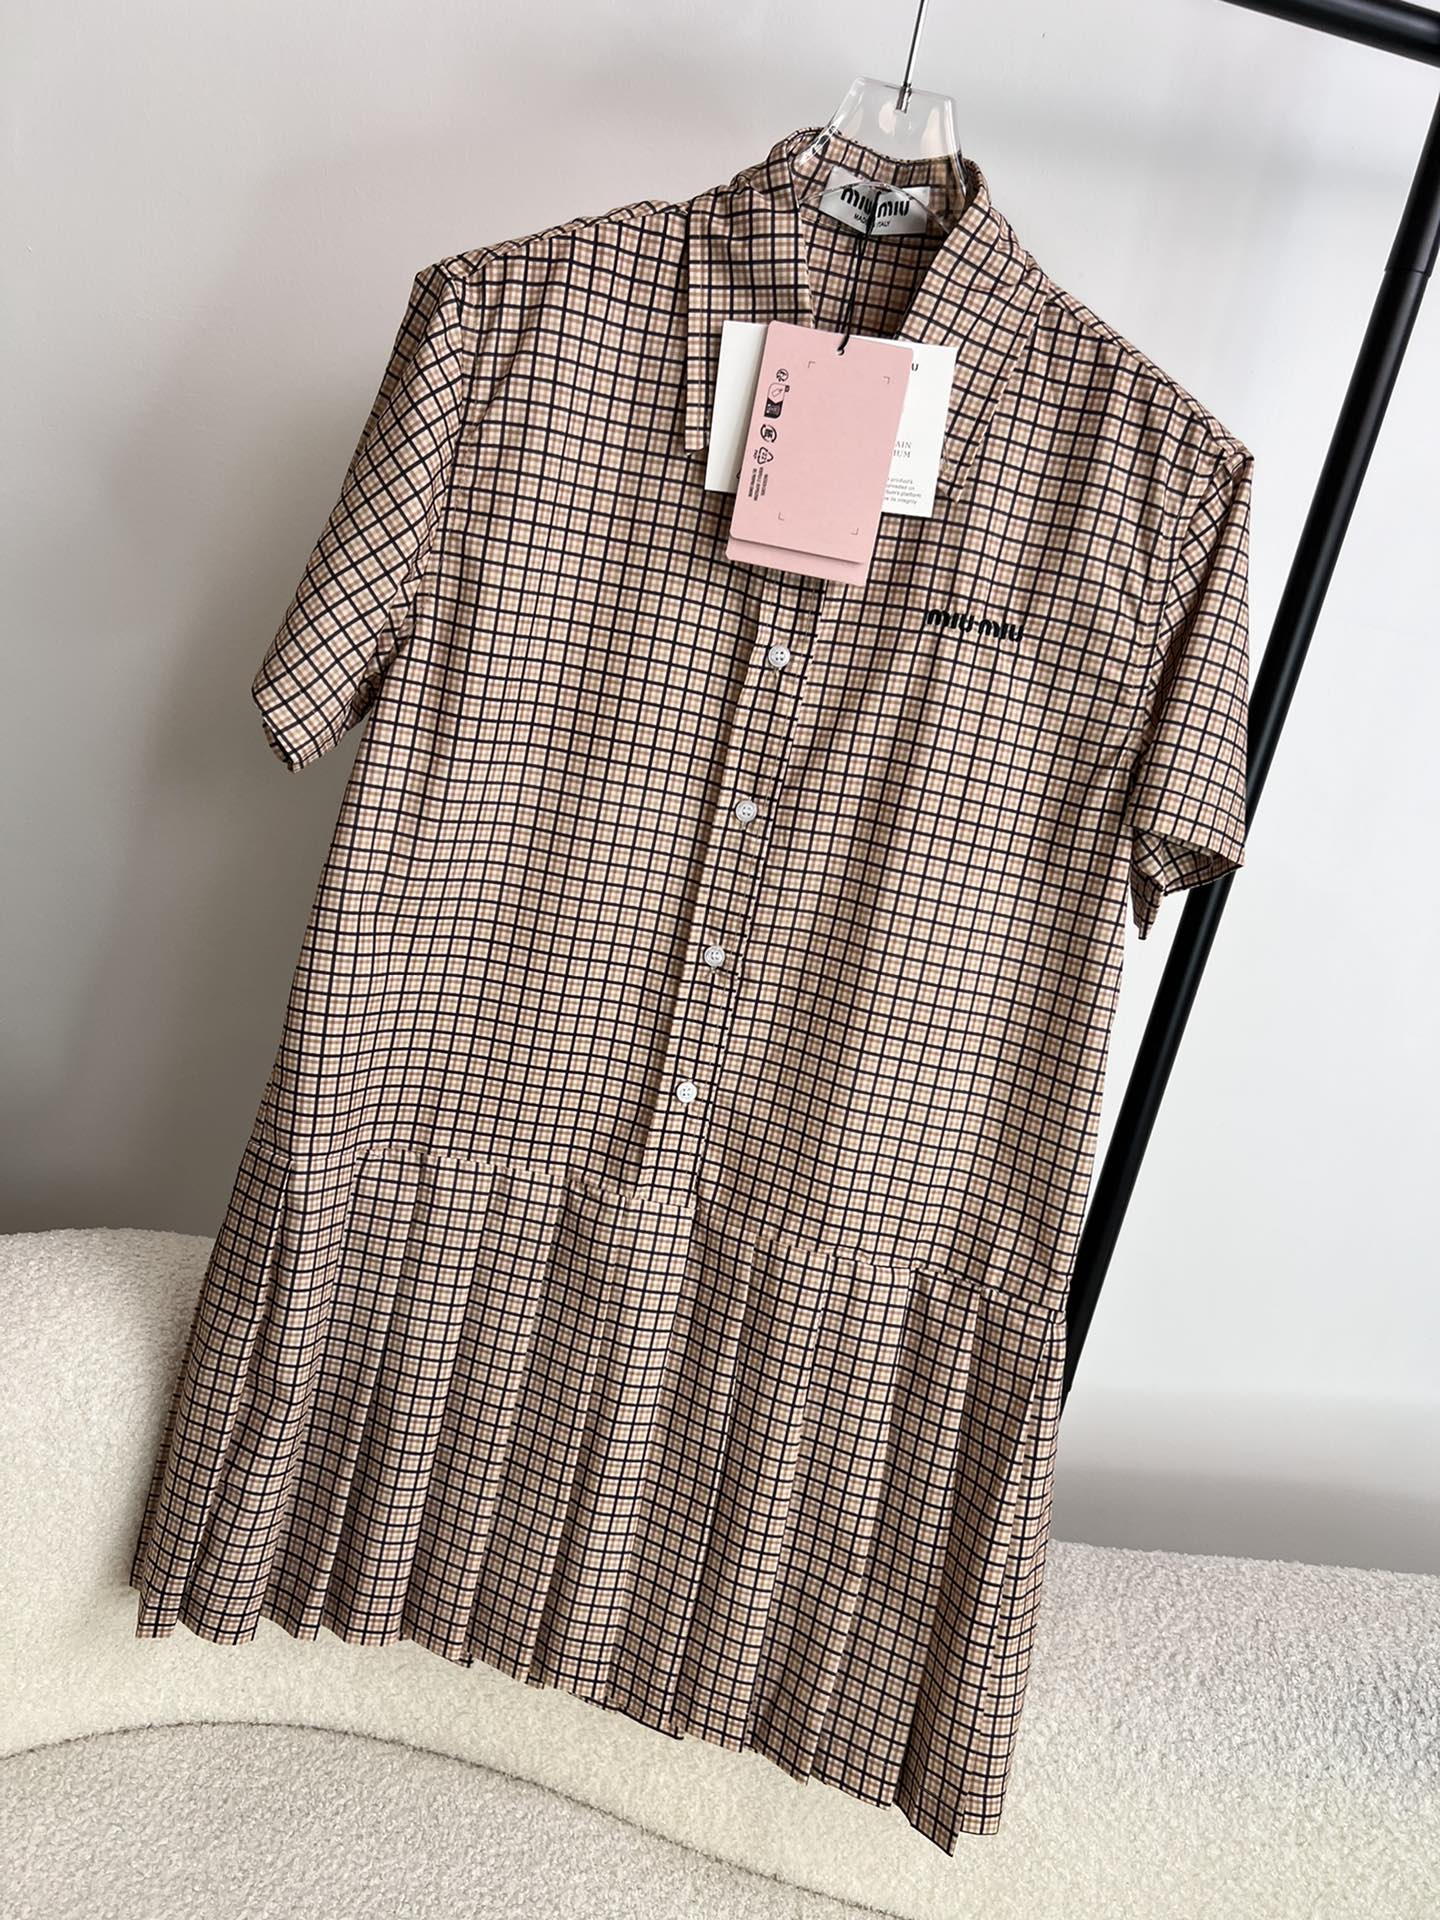 MiuMiu Clothing Dresses Shirts & Blouses AAAA Customize
 Summer Collection